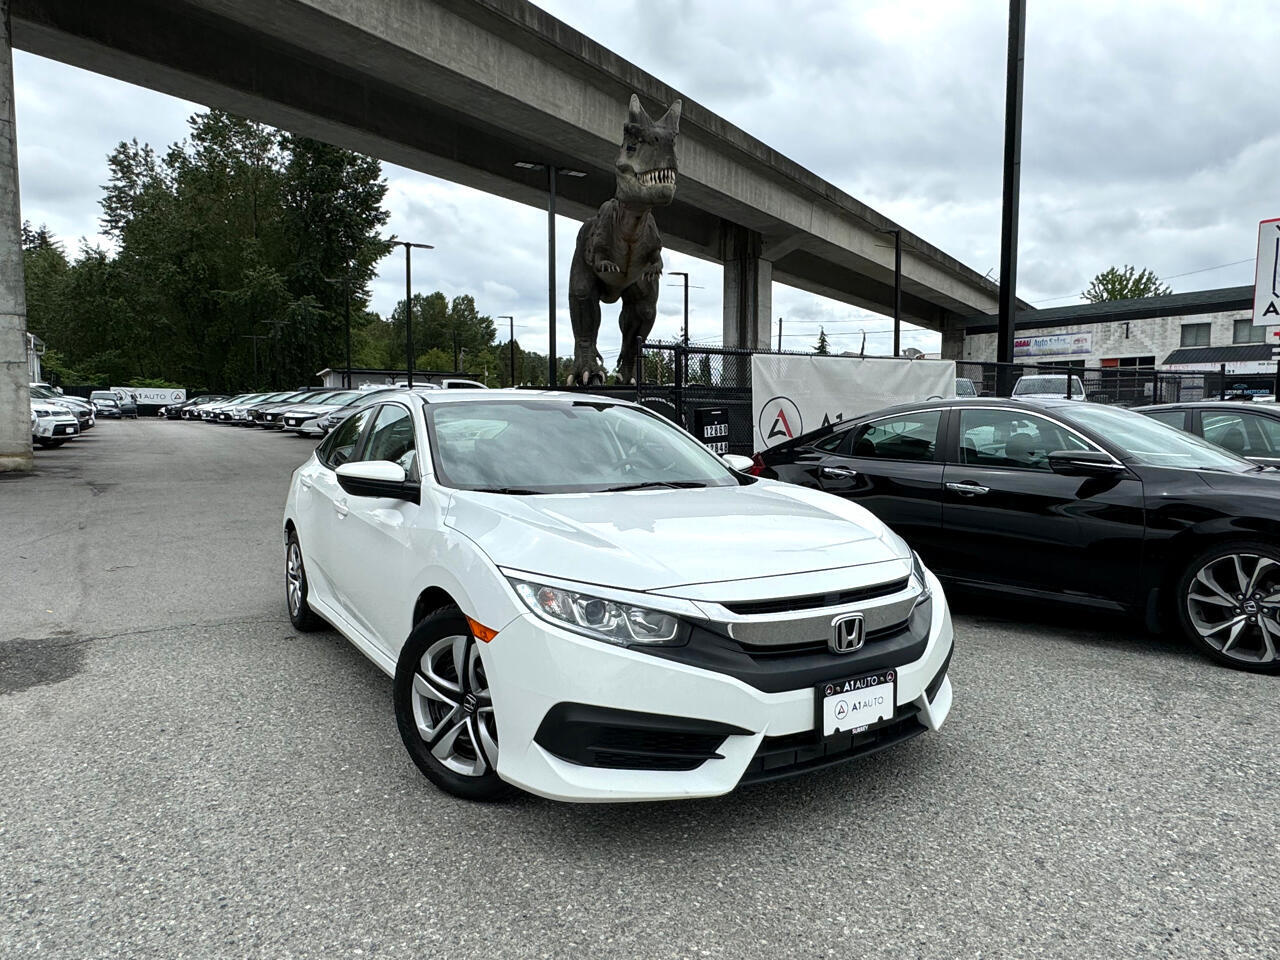 2018 Honda Civic LX - A/C, Alloy Wheels, CarPlay